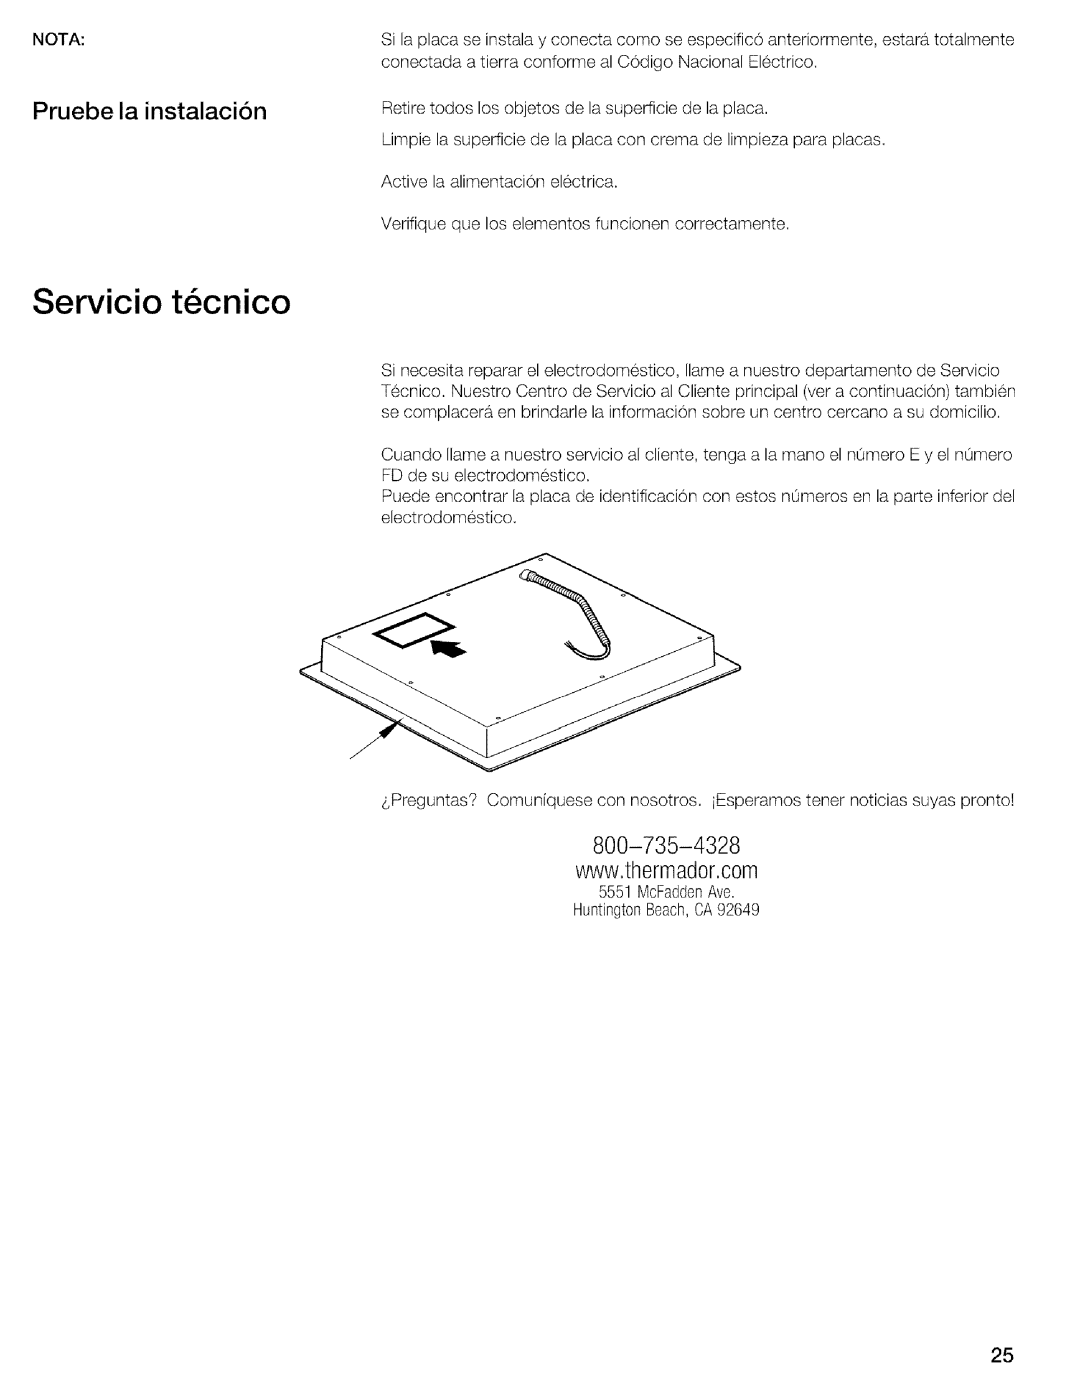 Thermador CIT304EM, CIT304DS installation instructions Servicio t cnico, Pruebe la instalaci6n 